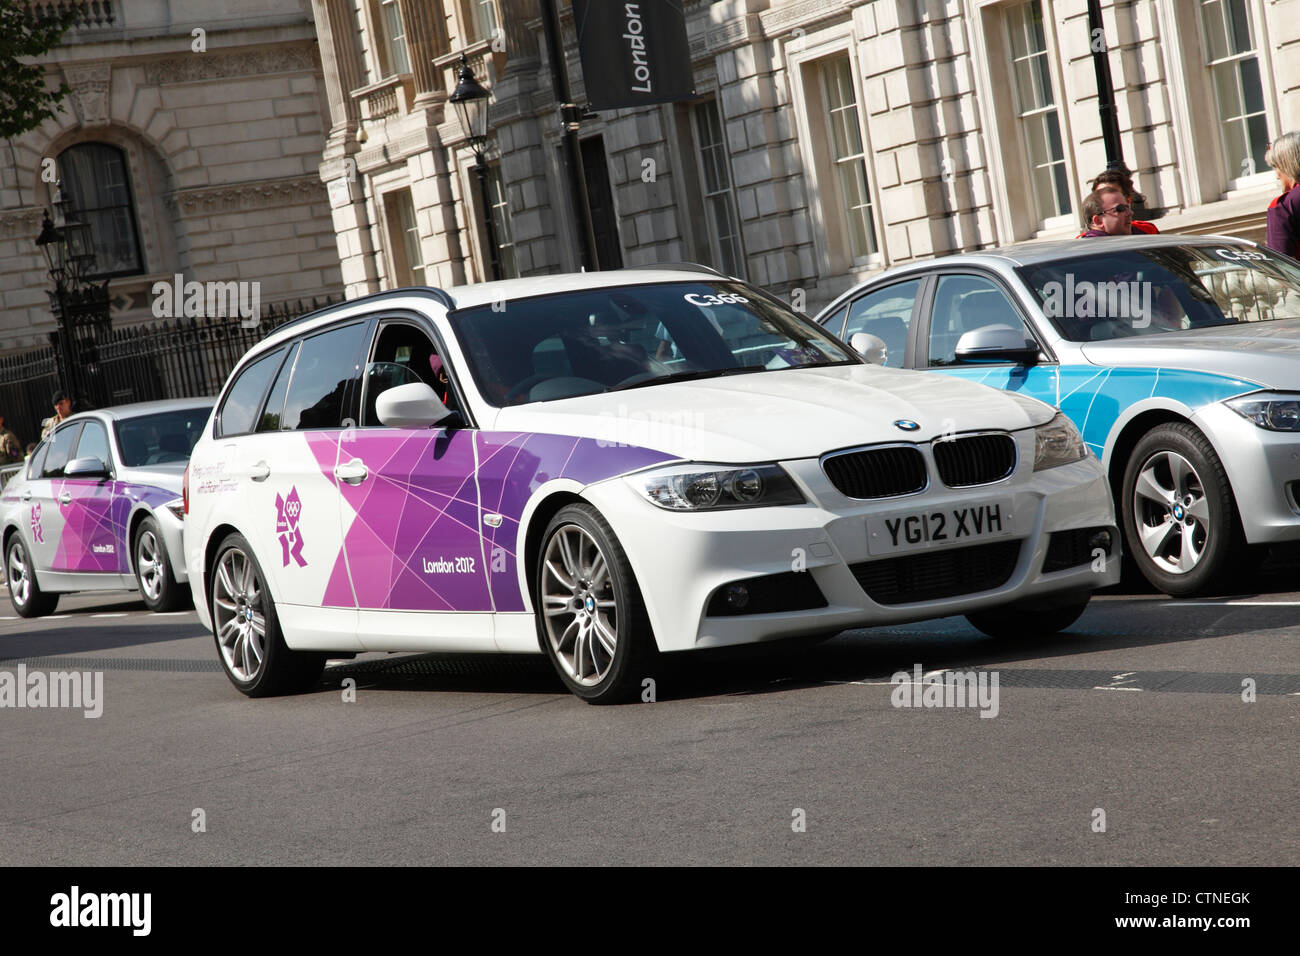 London 2012 official Olympic BMW cars on Whitehall, London, England, U.K. Stock Photo